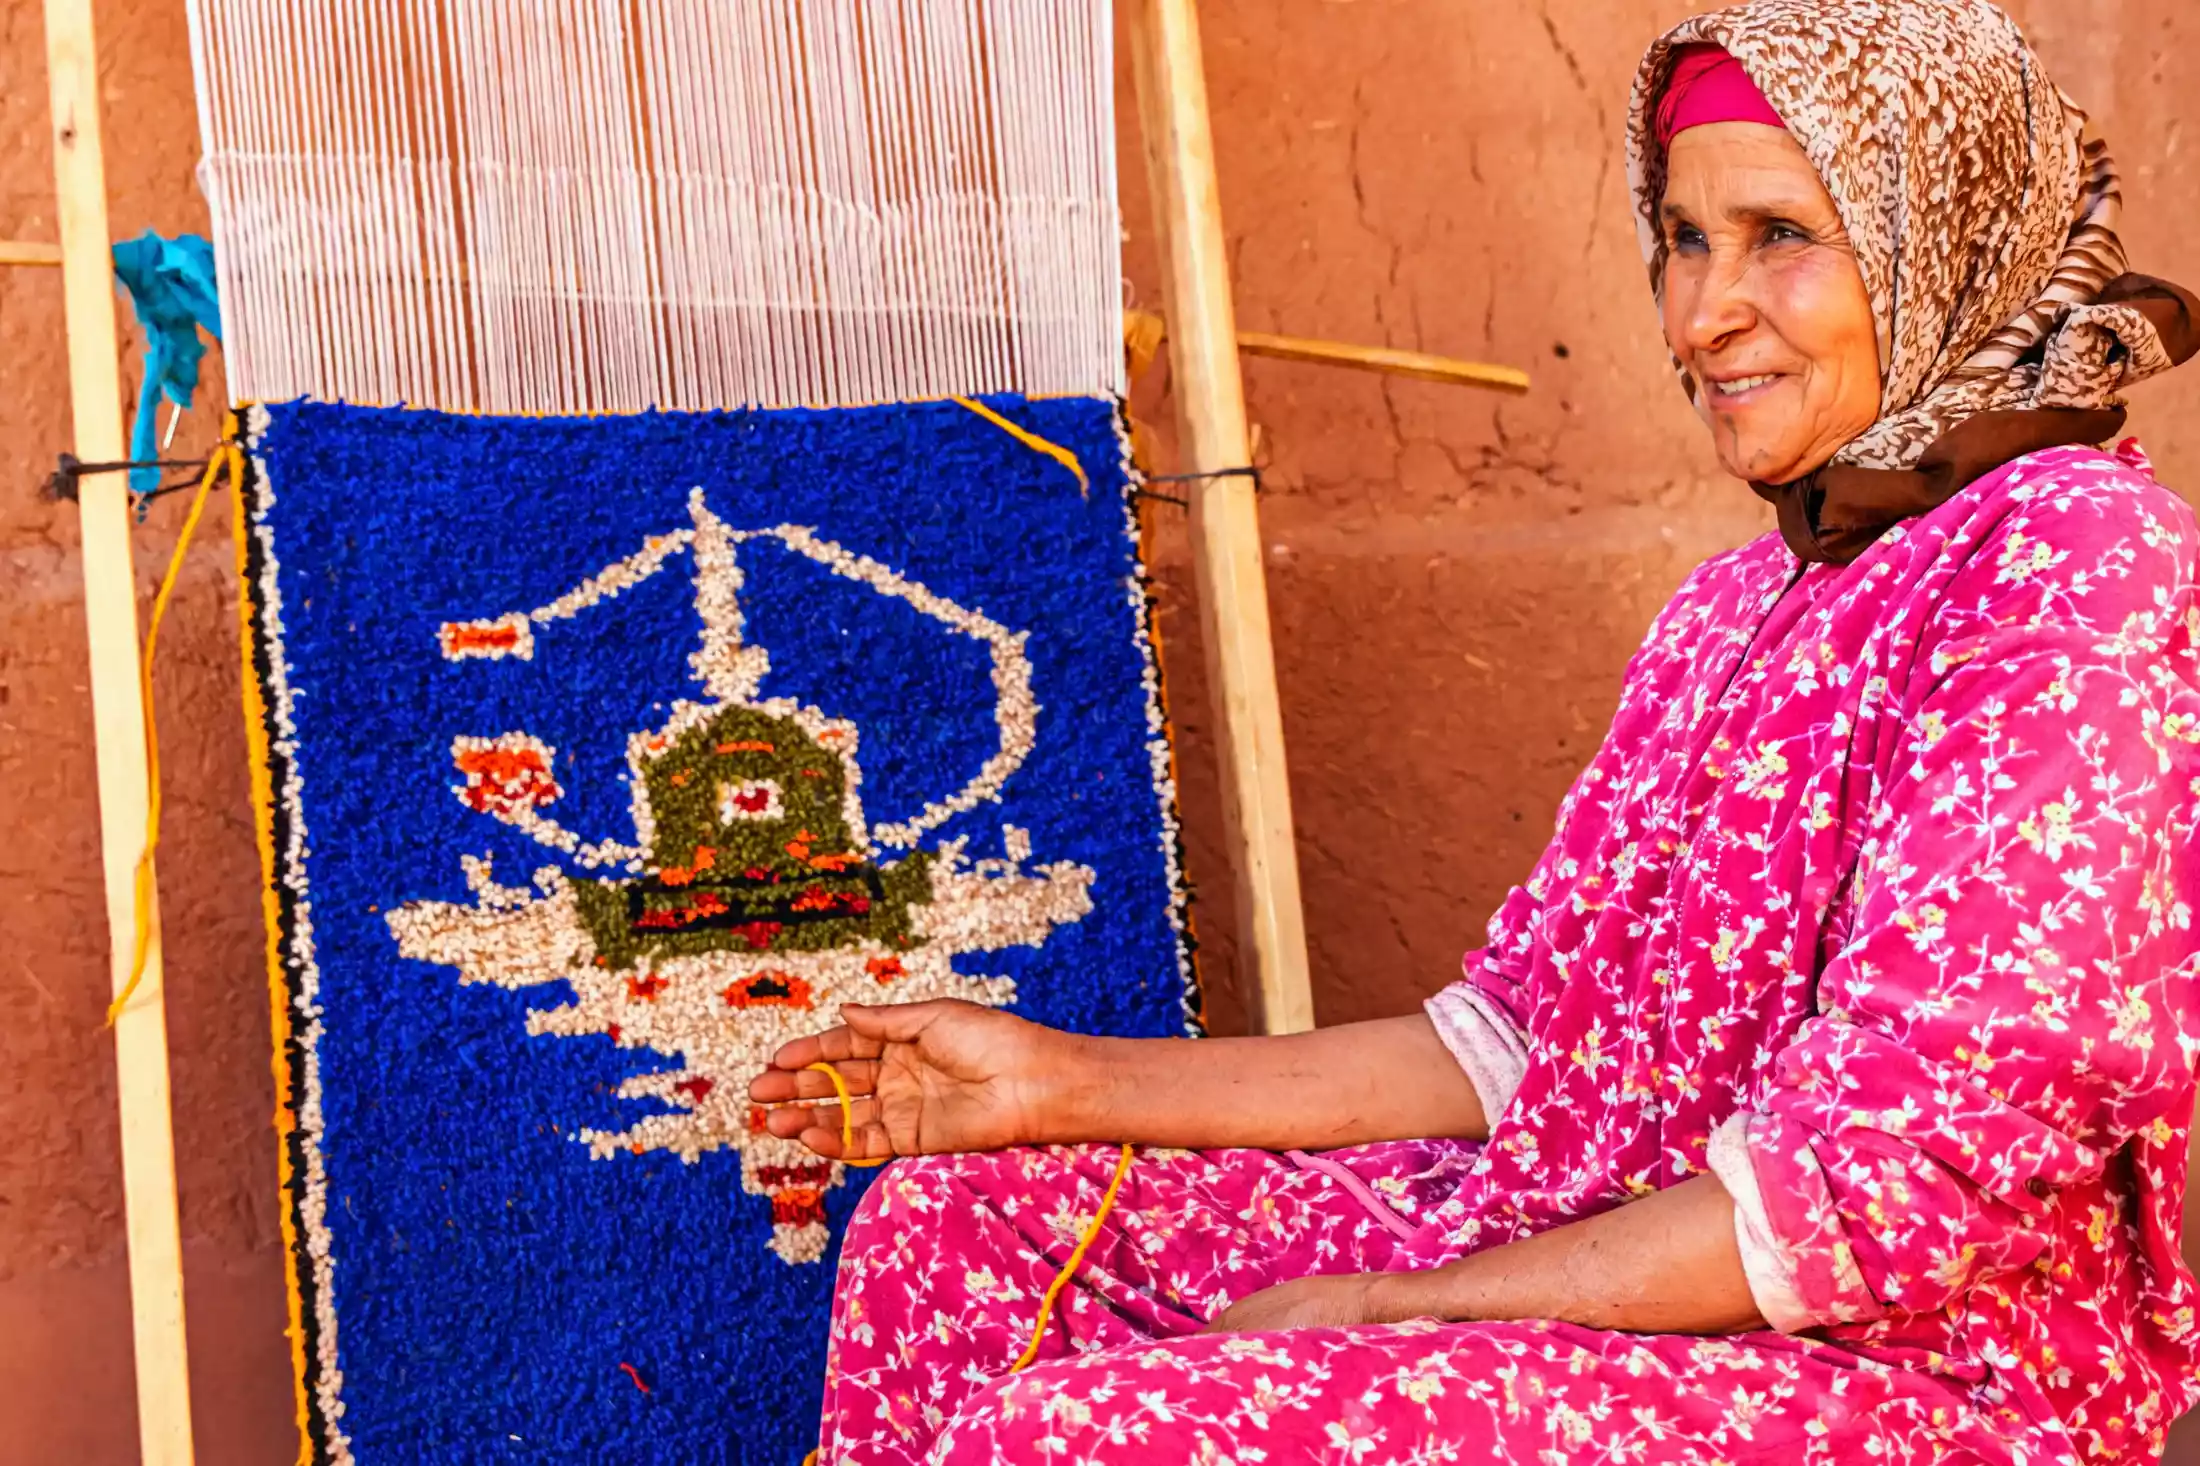 Berber woman weaving textiles.